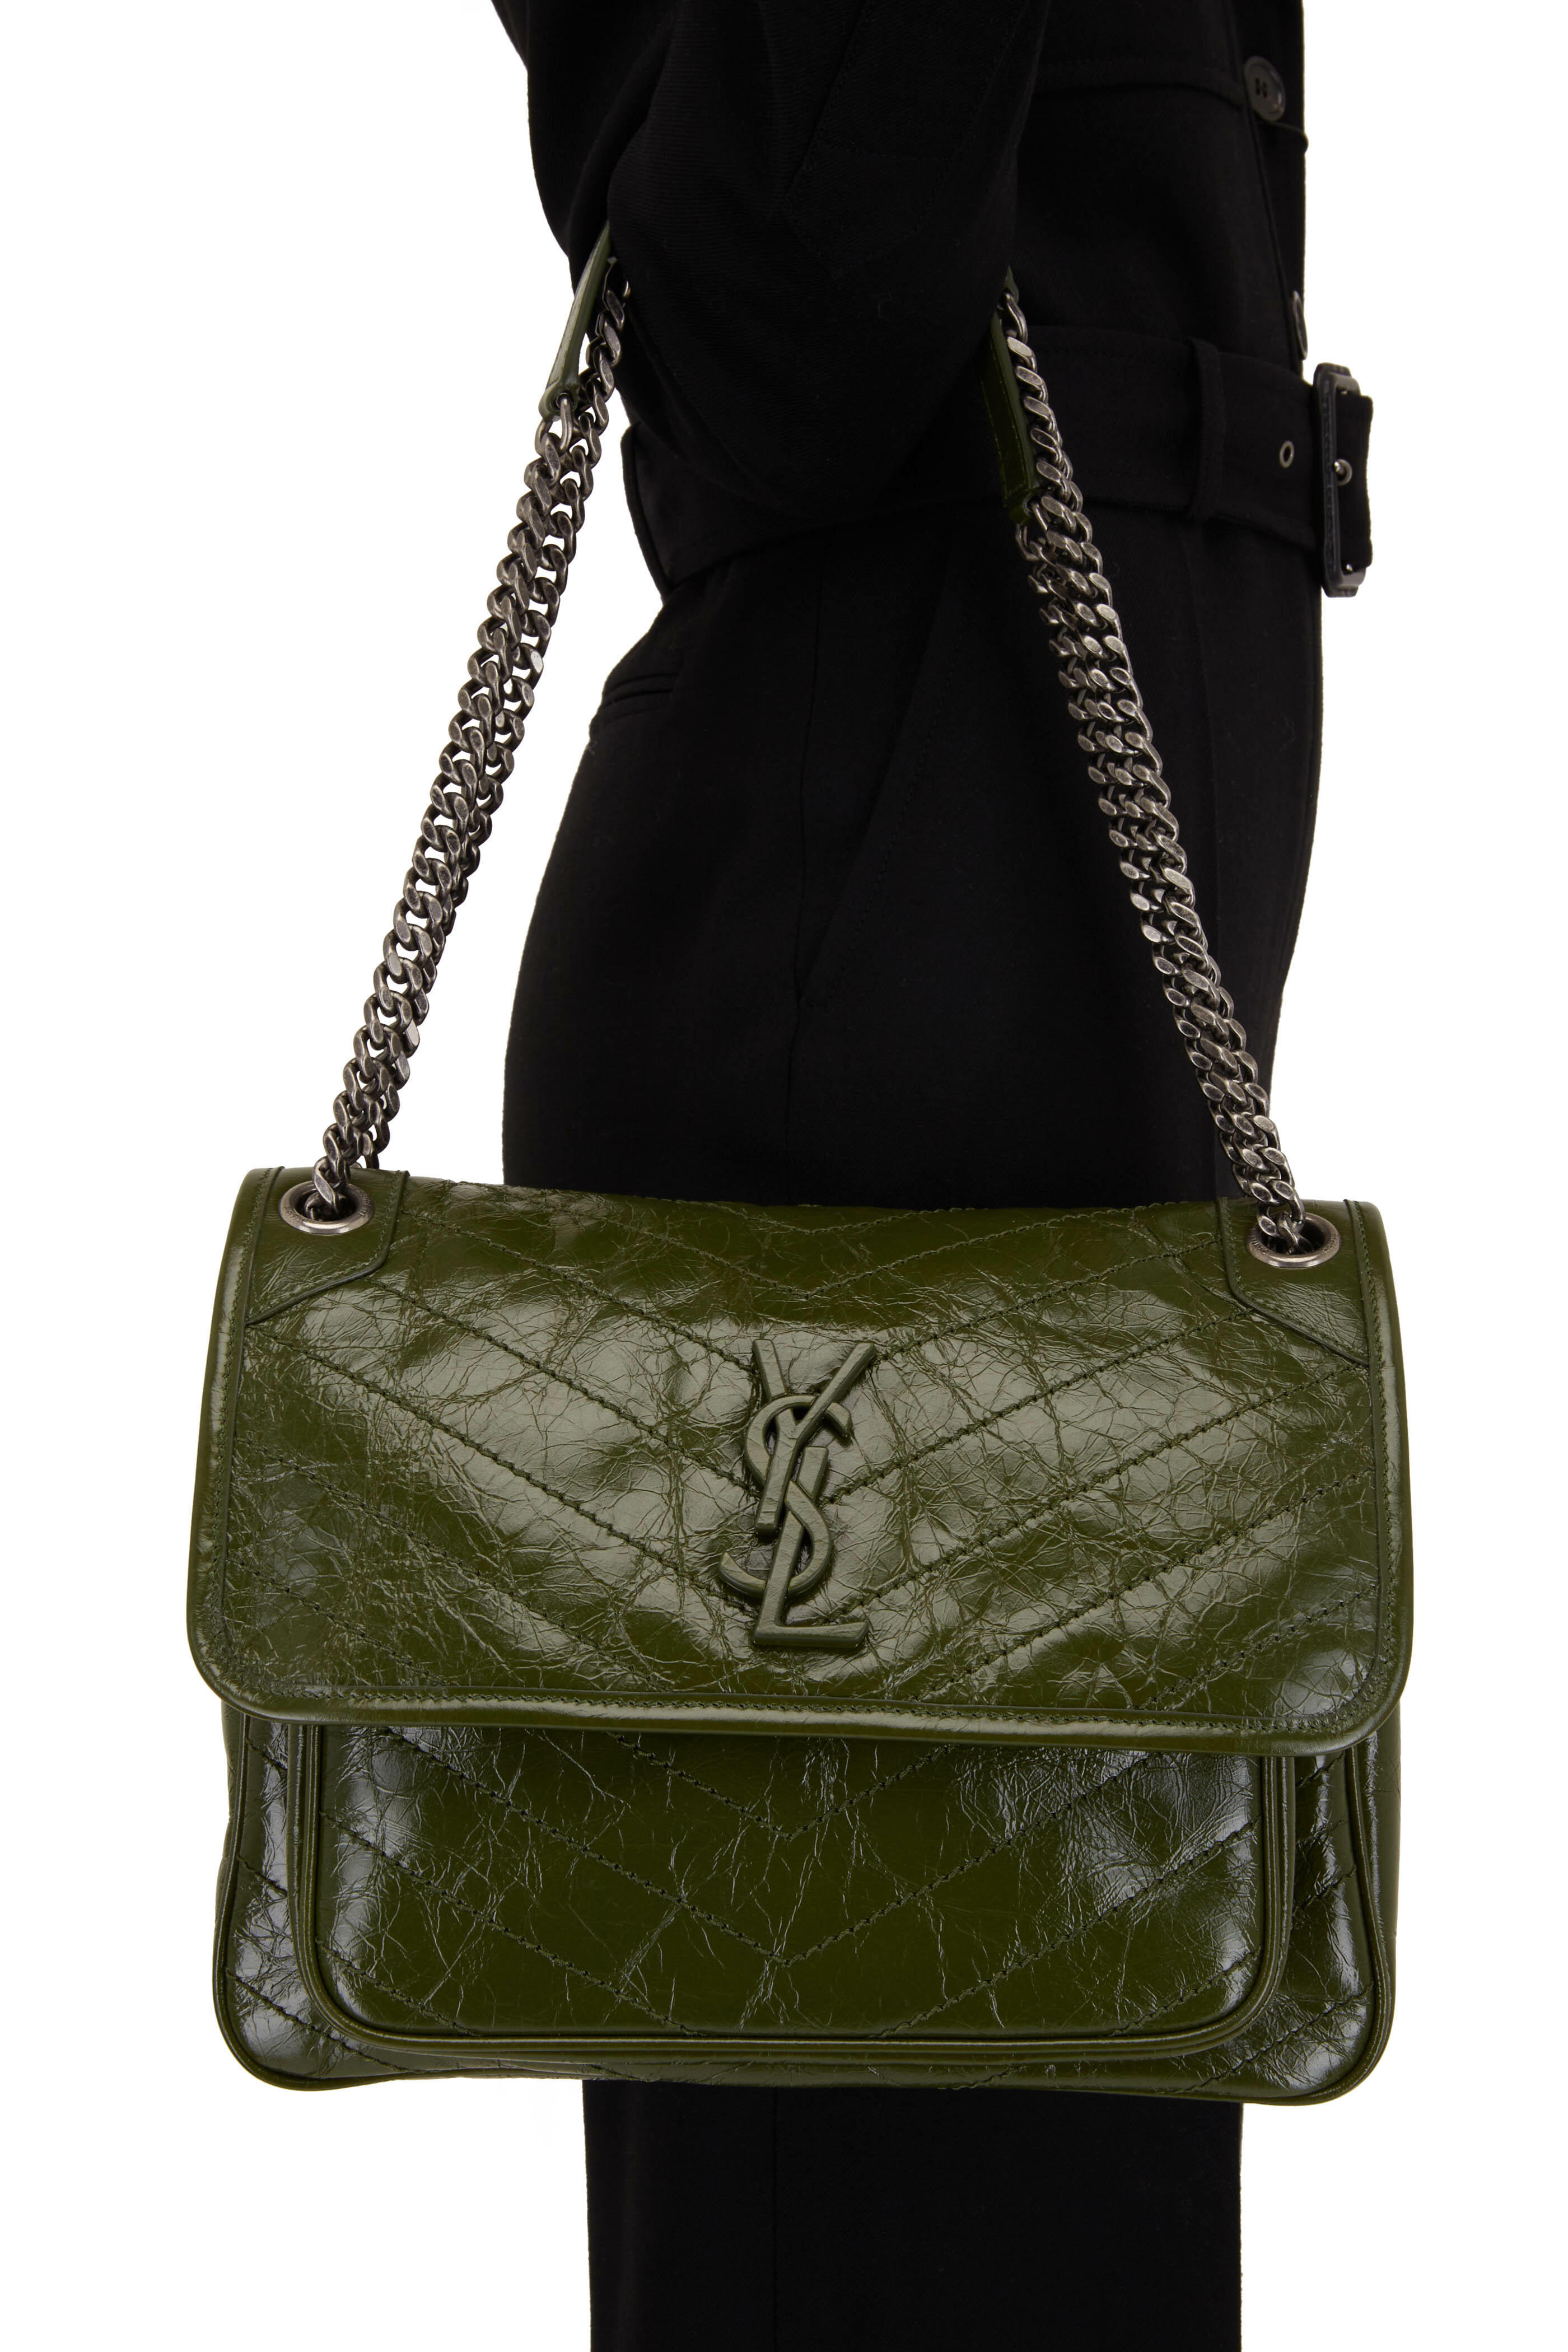 Saint Laurent Women's Medium Niki Leather Shoulder Bag